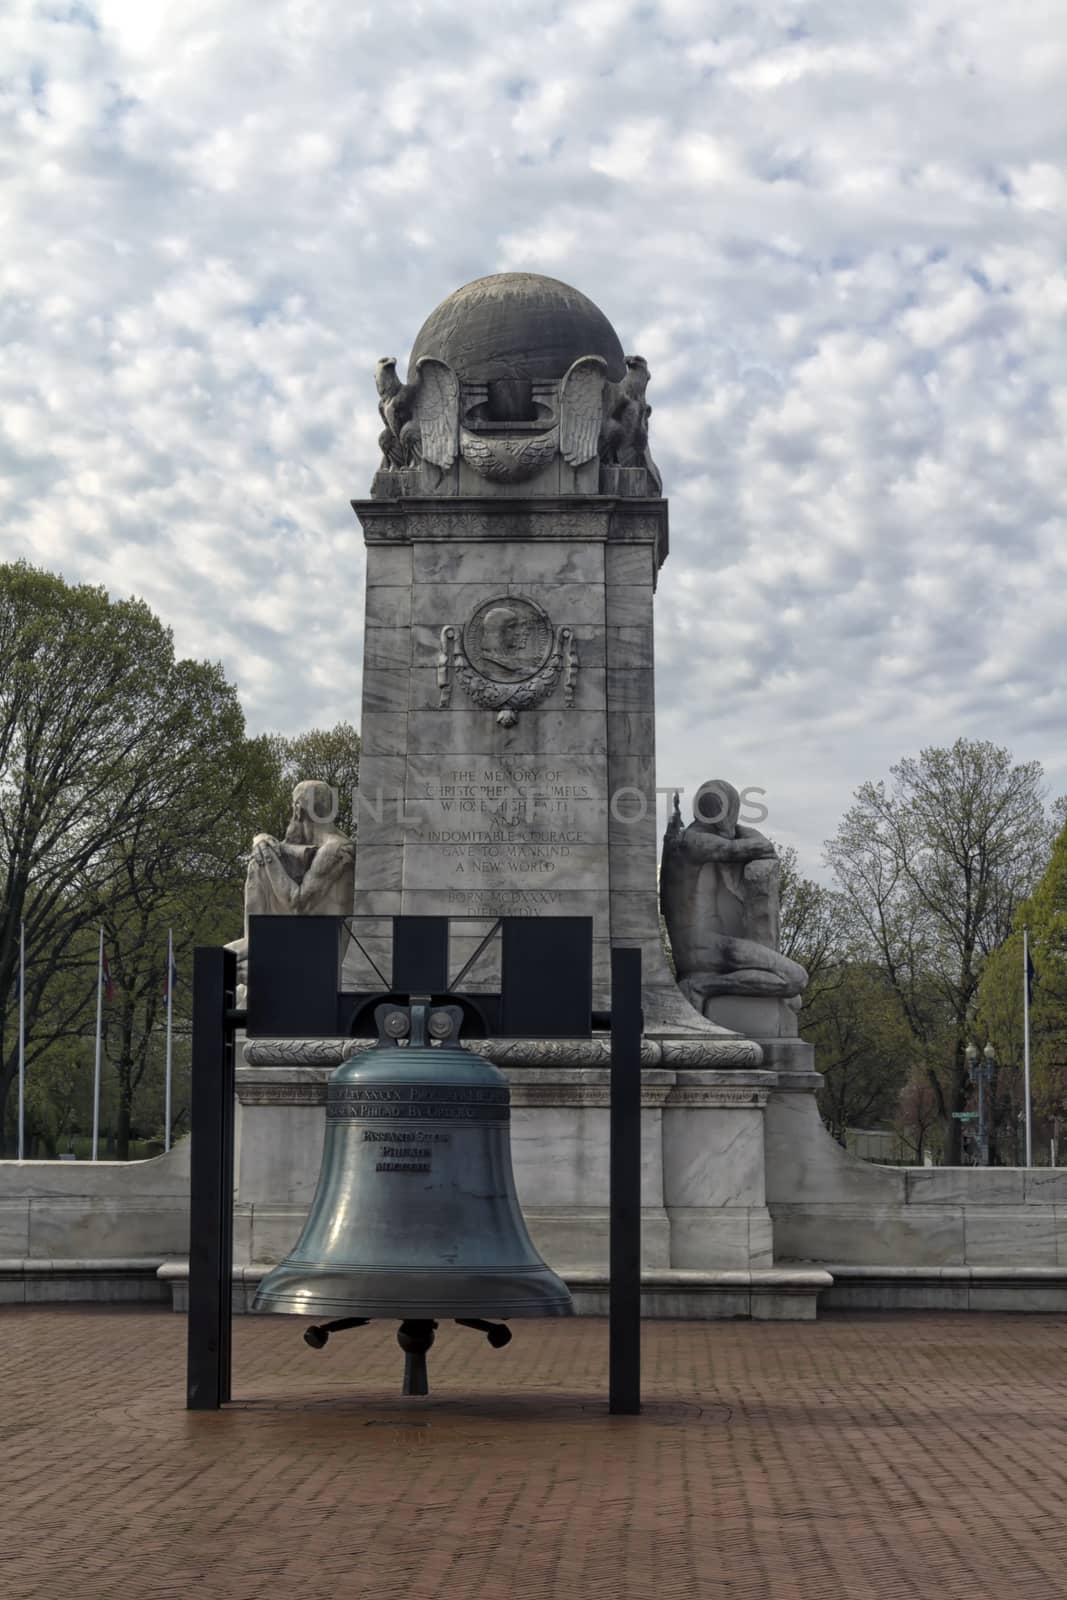 Liberty Bell Replica by Moonb007